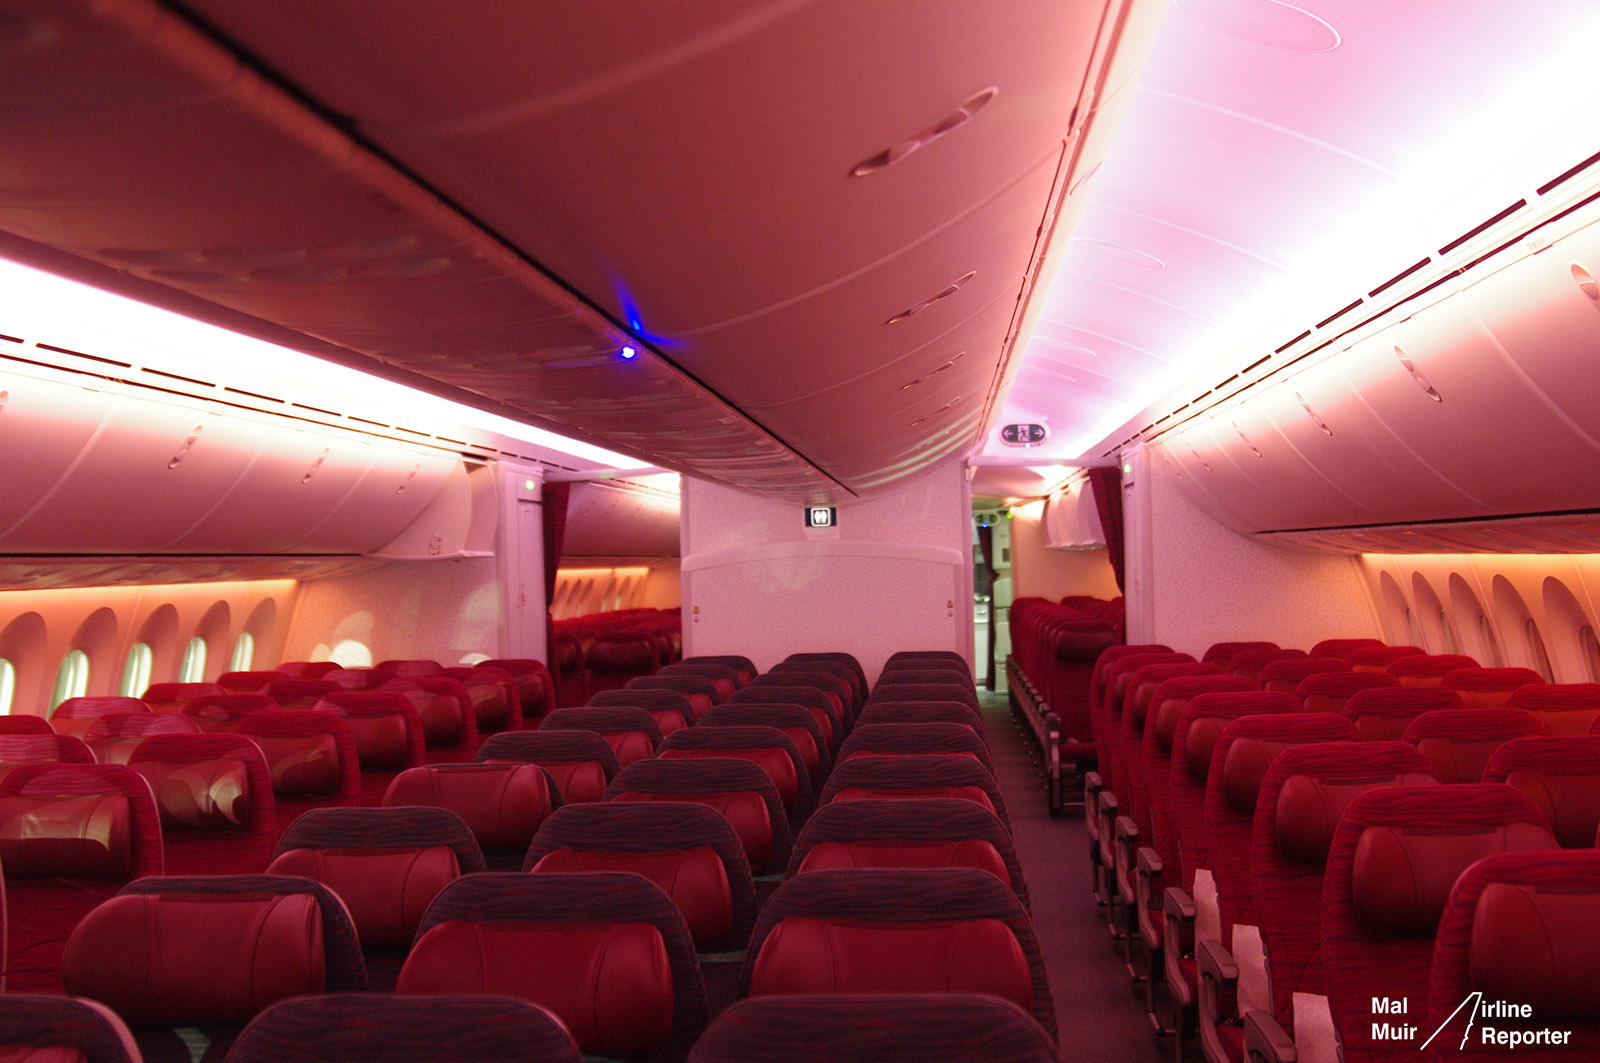 qatar airways economy class boeing 777